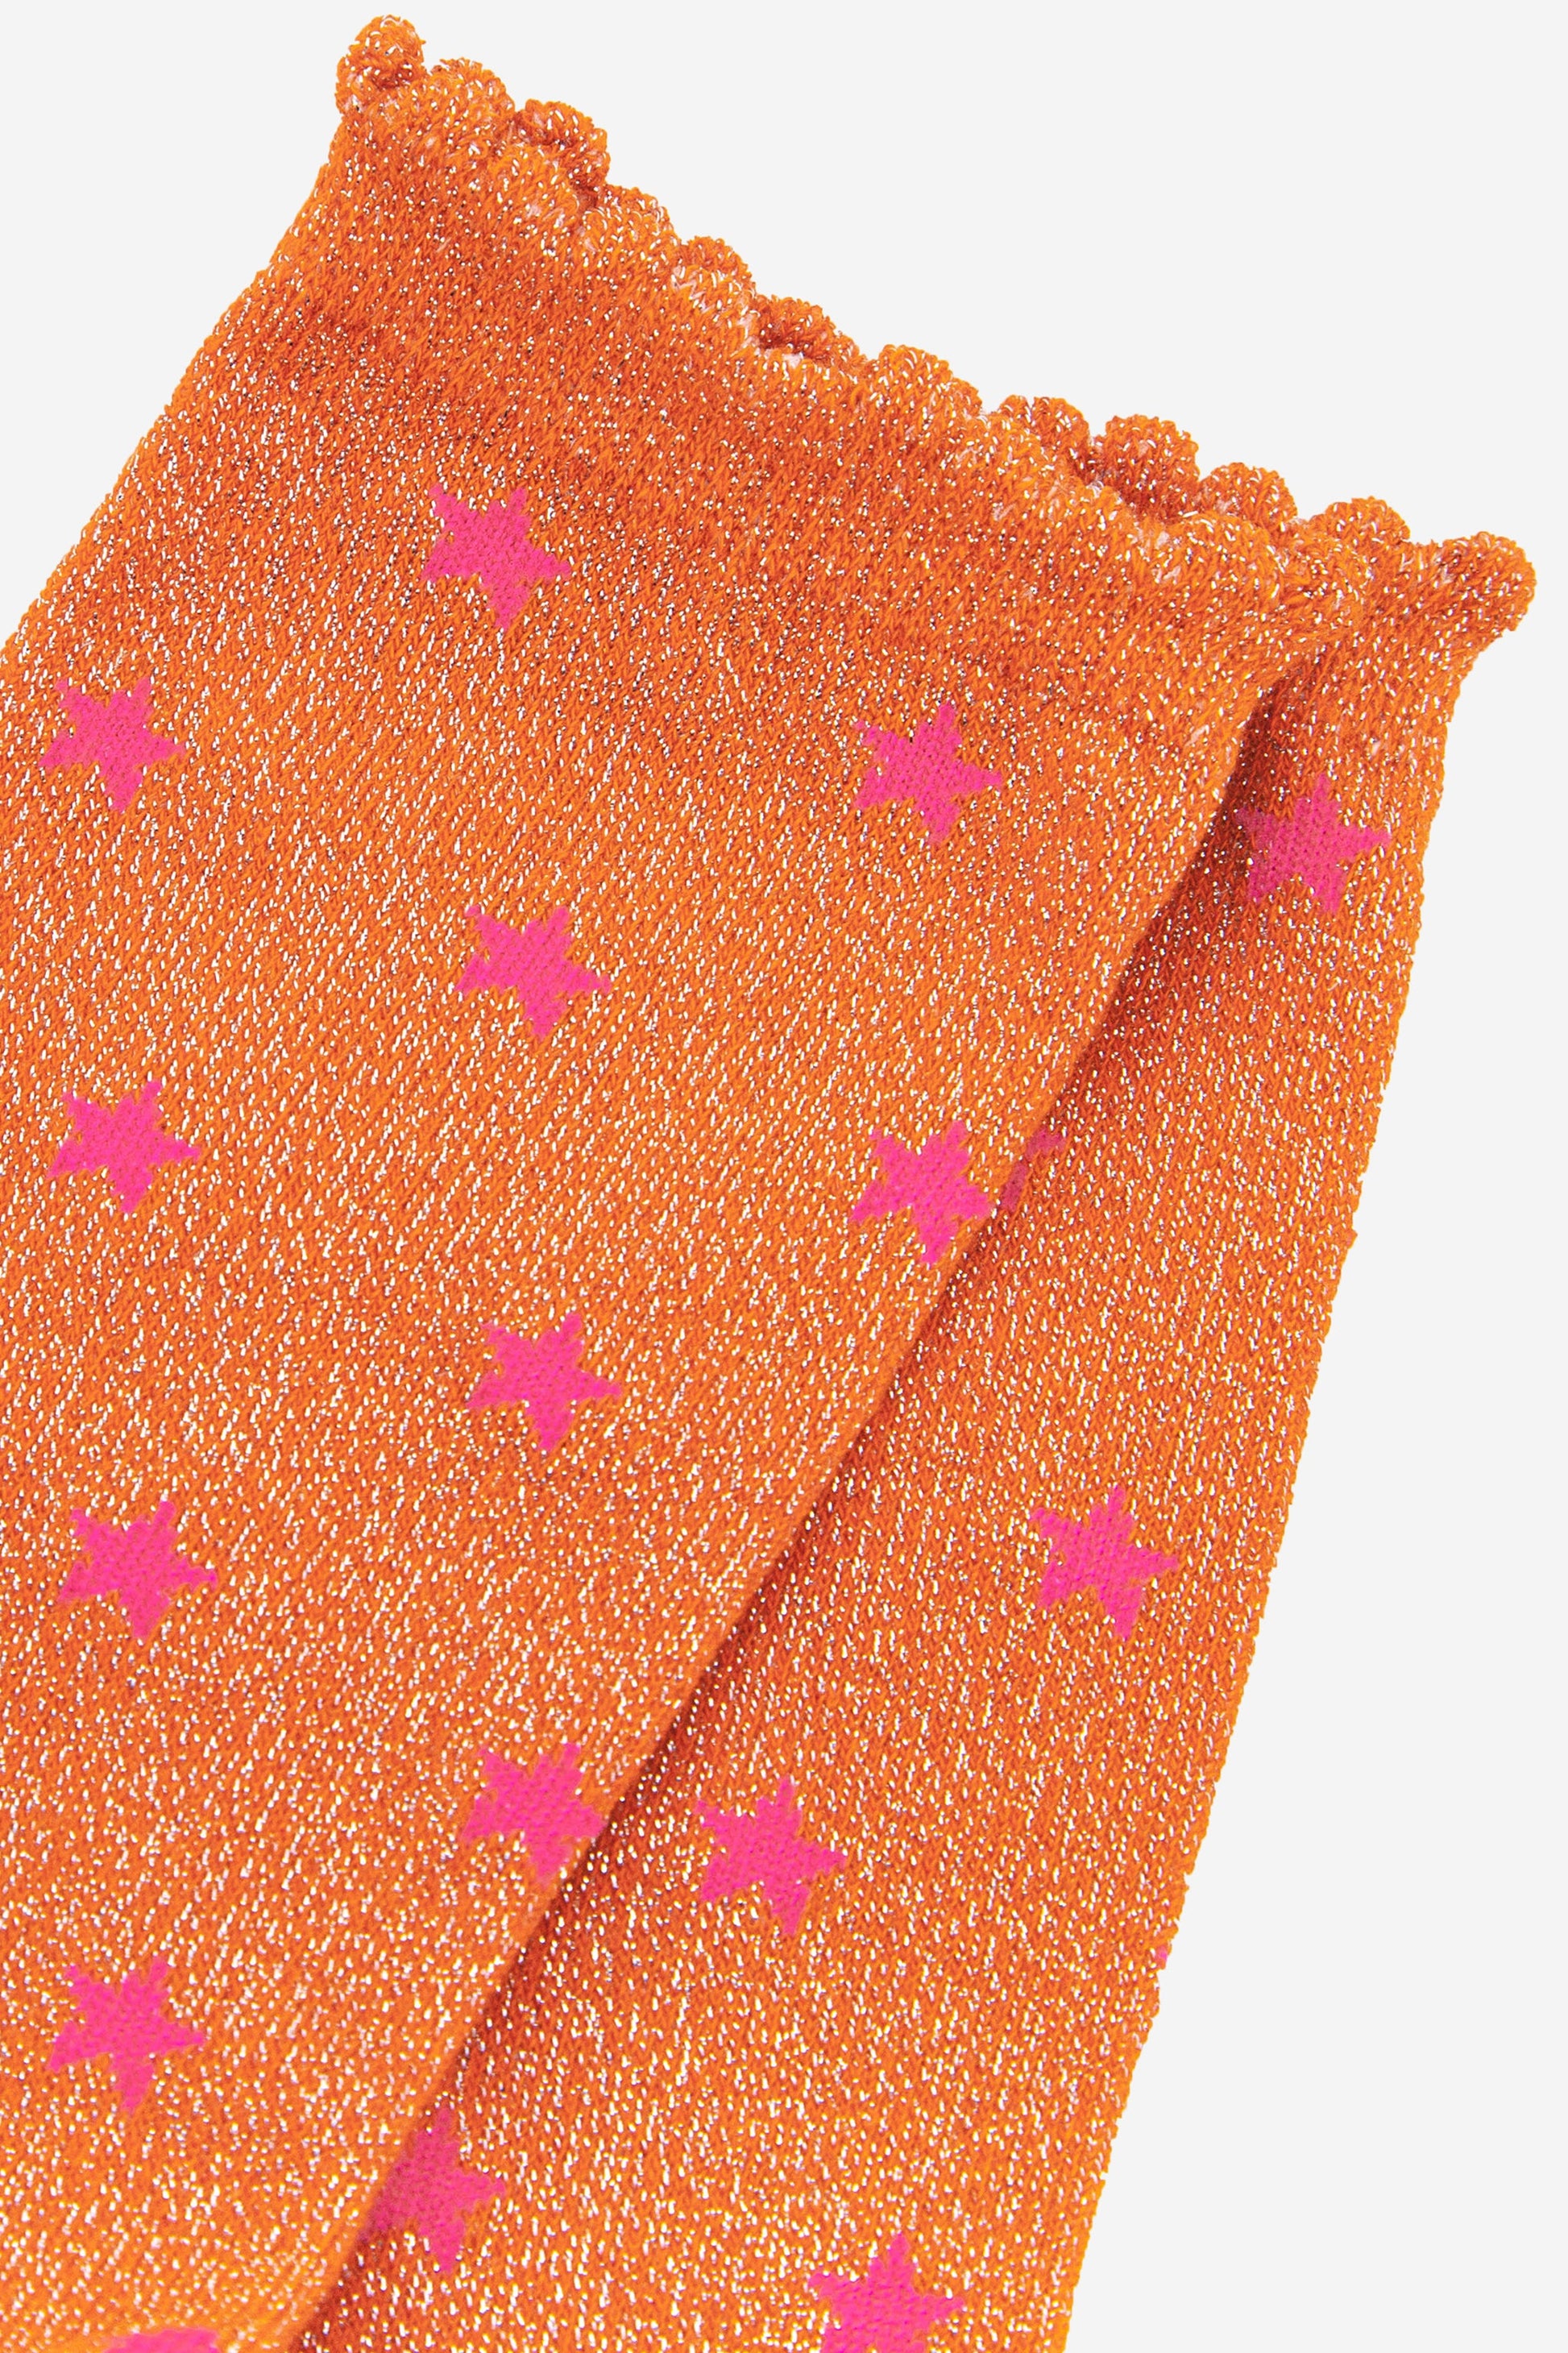 close up of the pink star pattern on the orange glitter socks